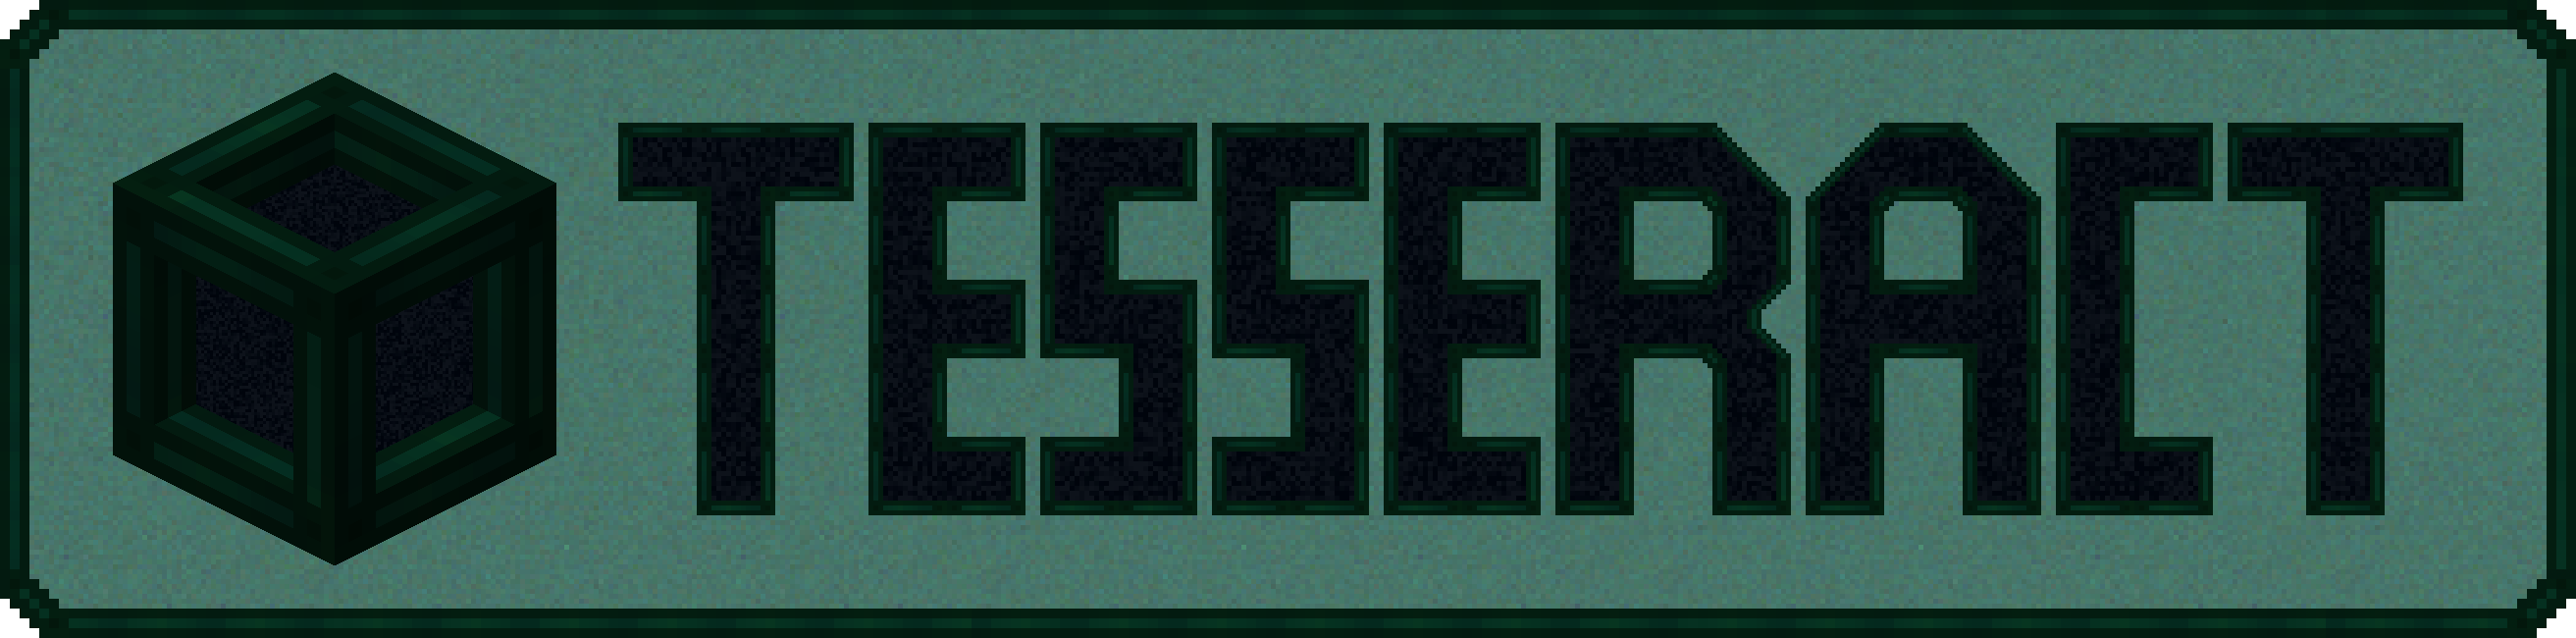 Tesseract screenshot 1